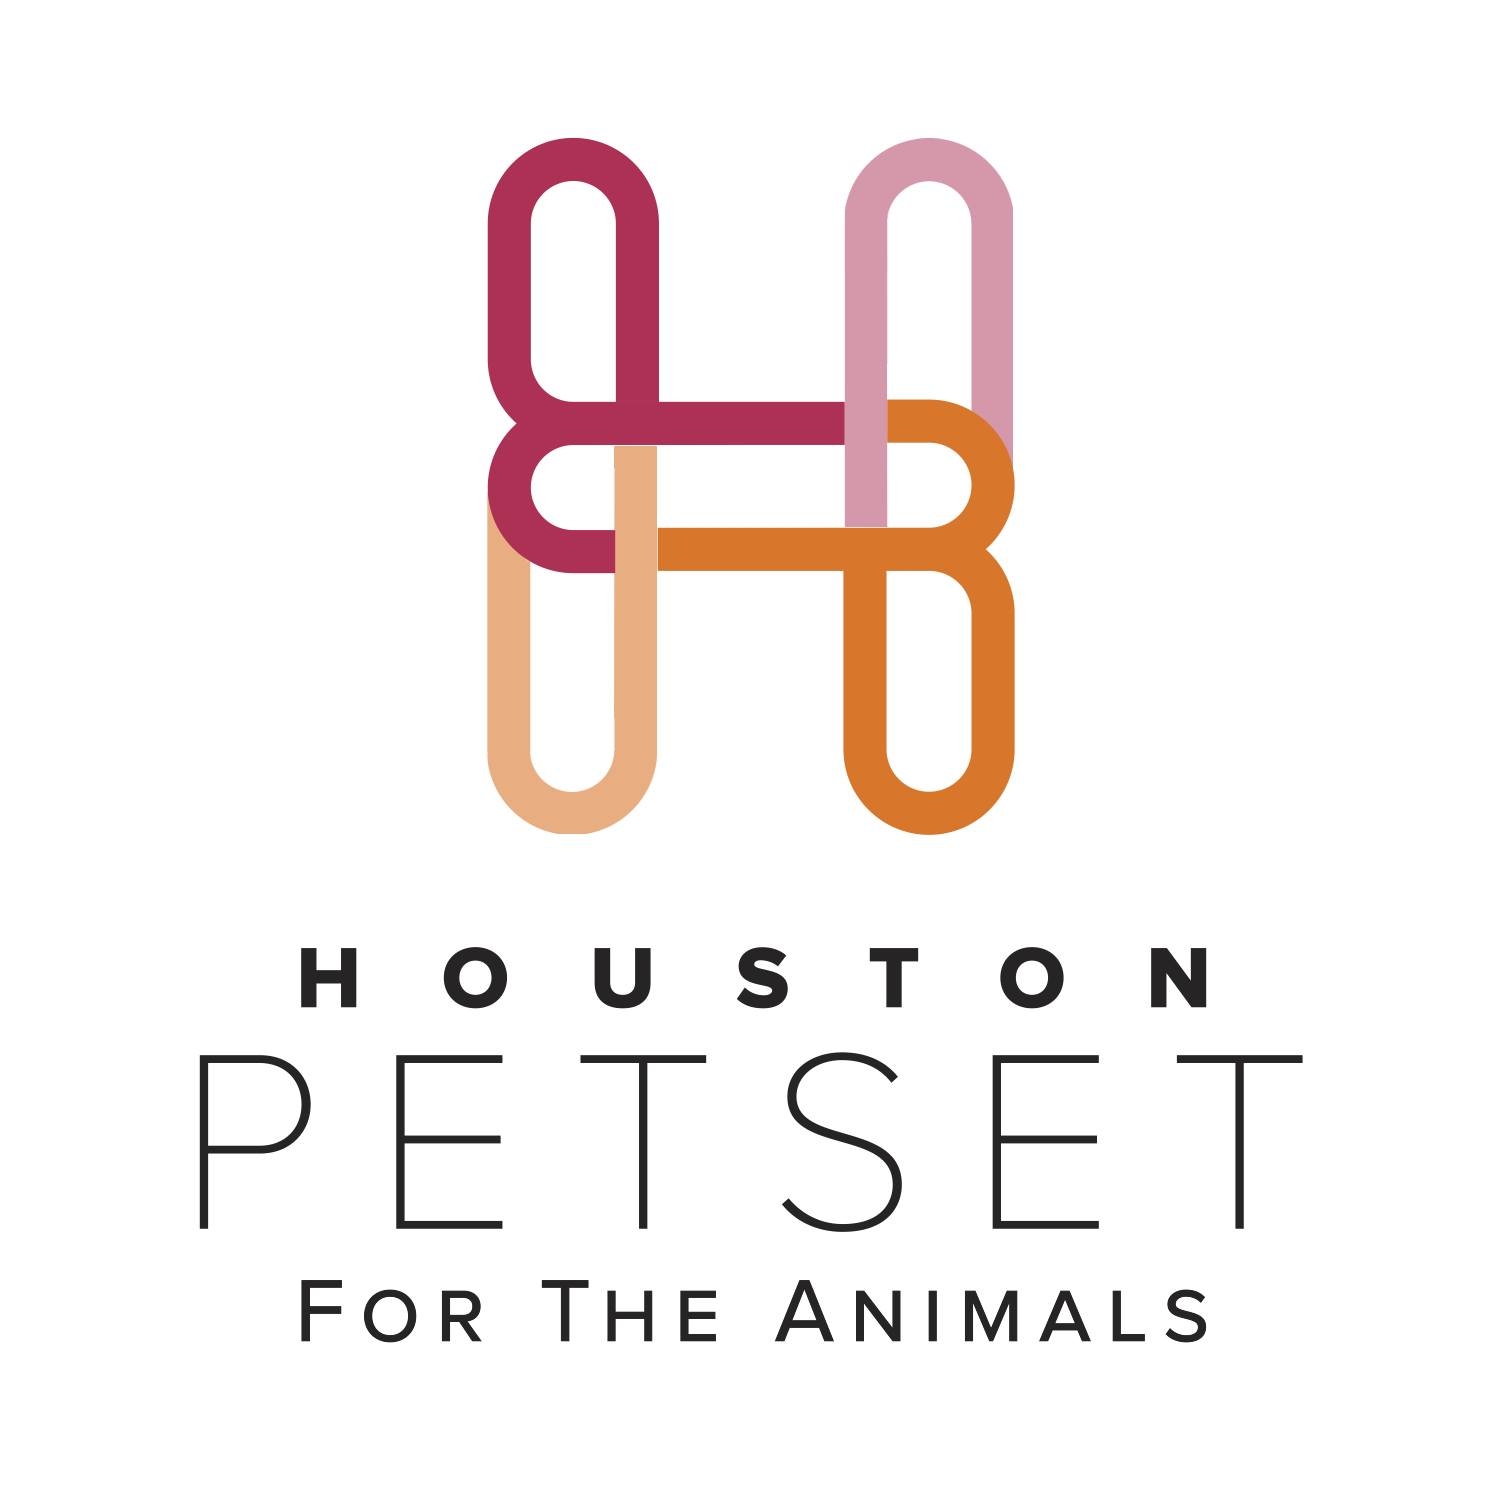 Houston PetSet